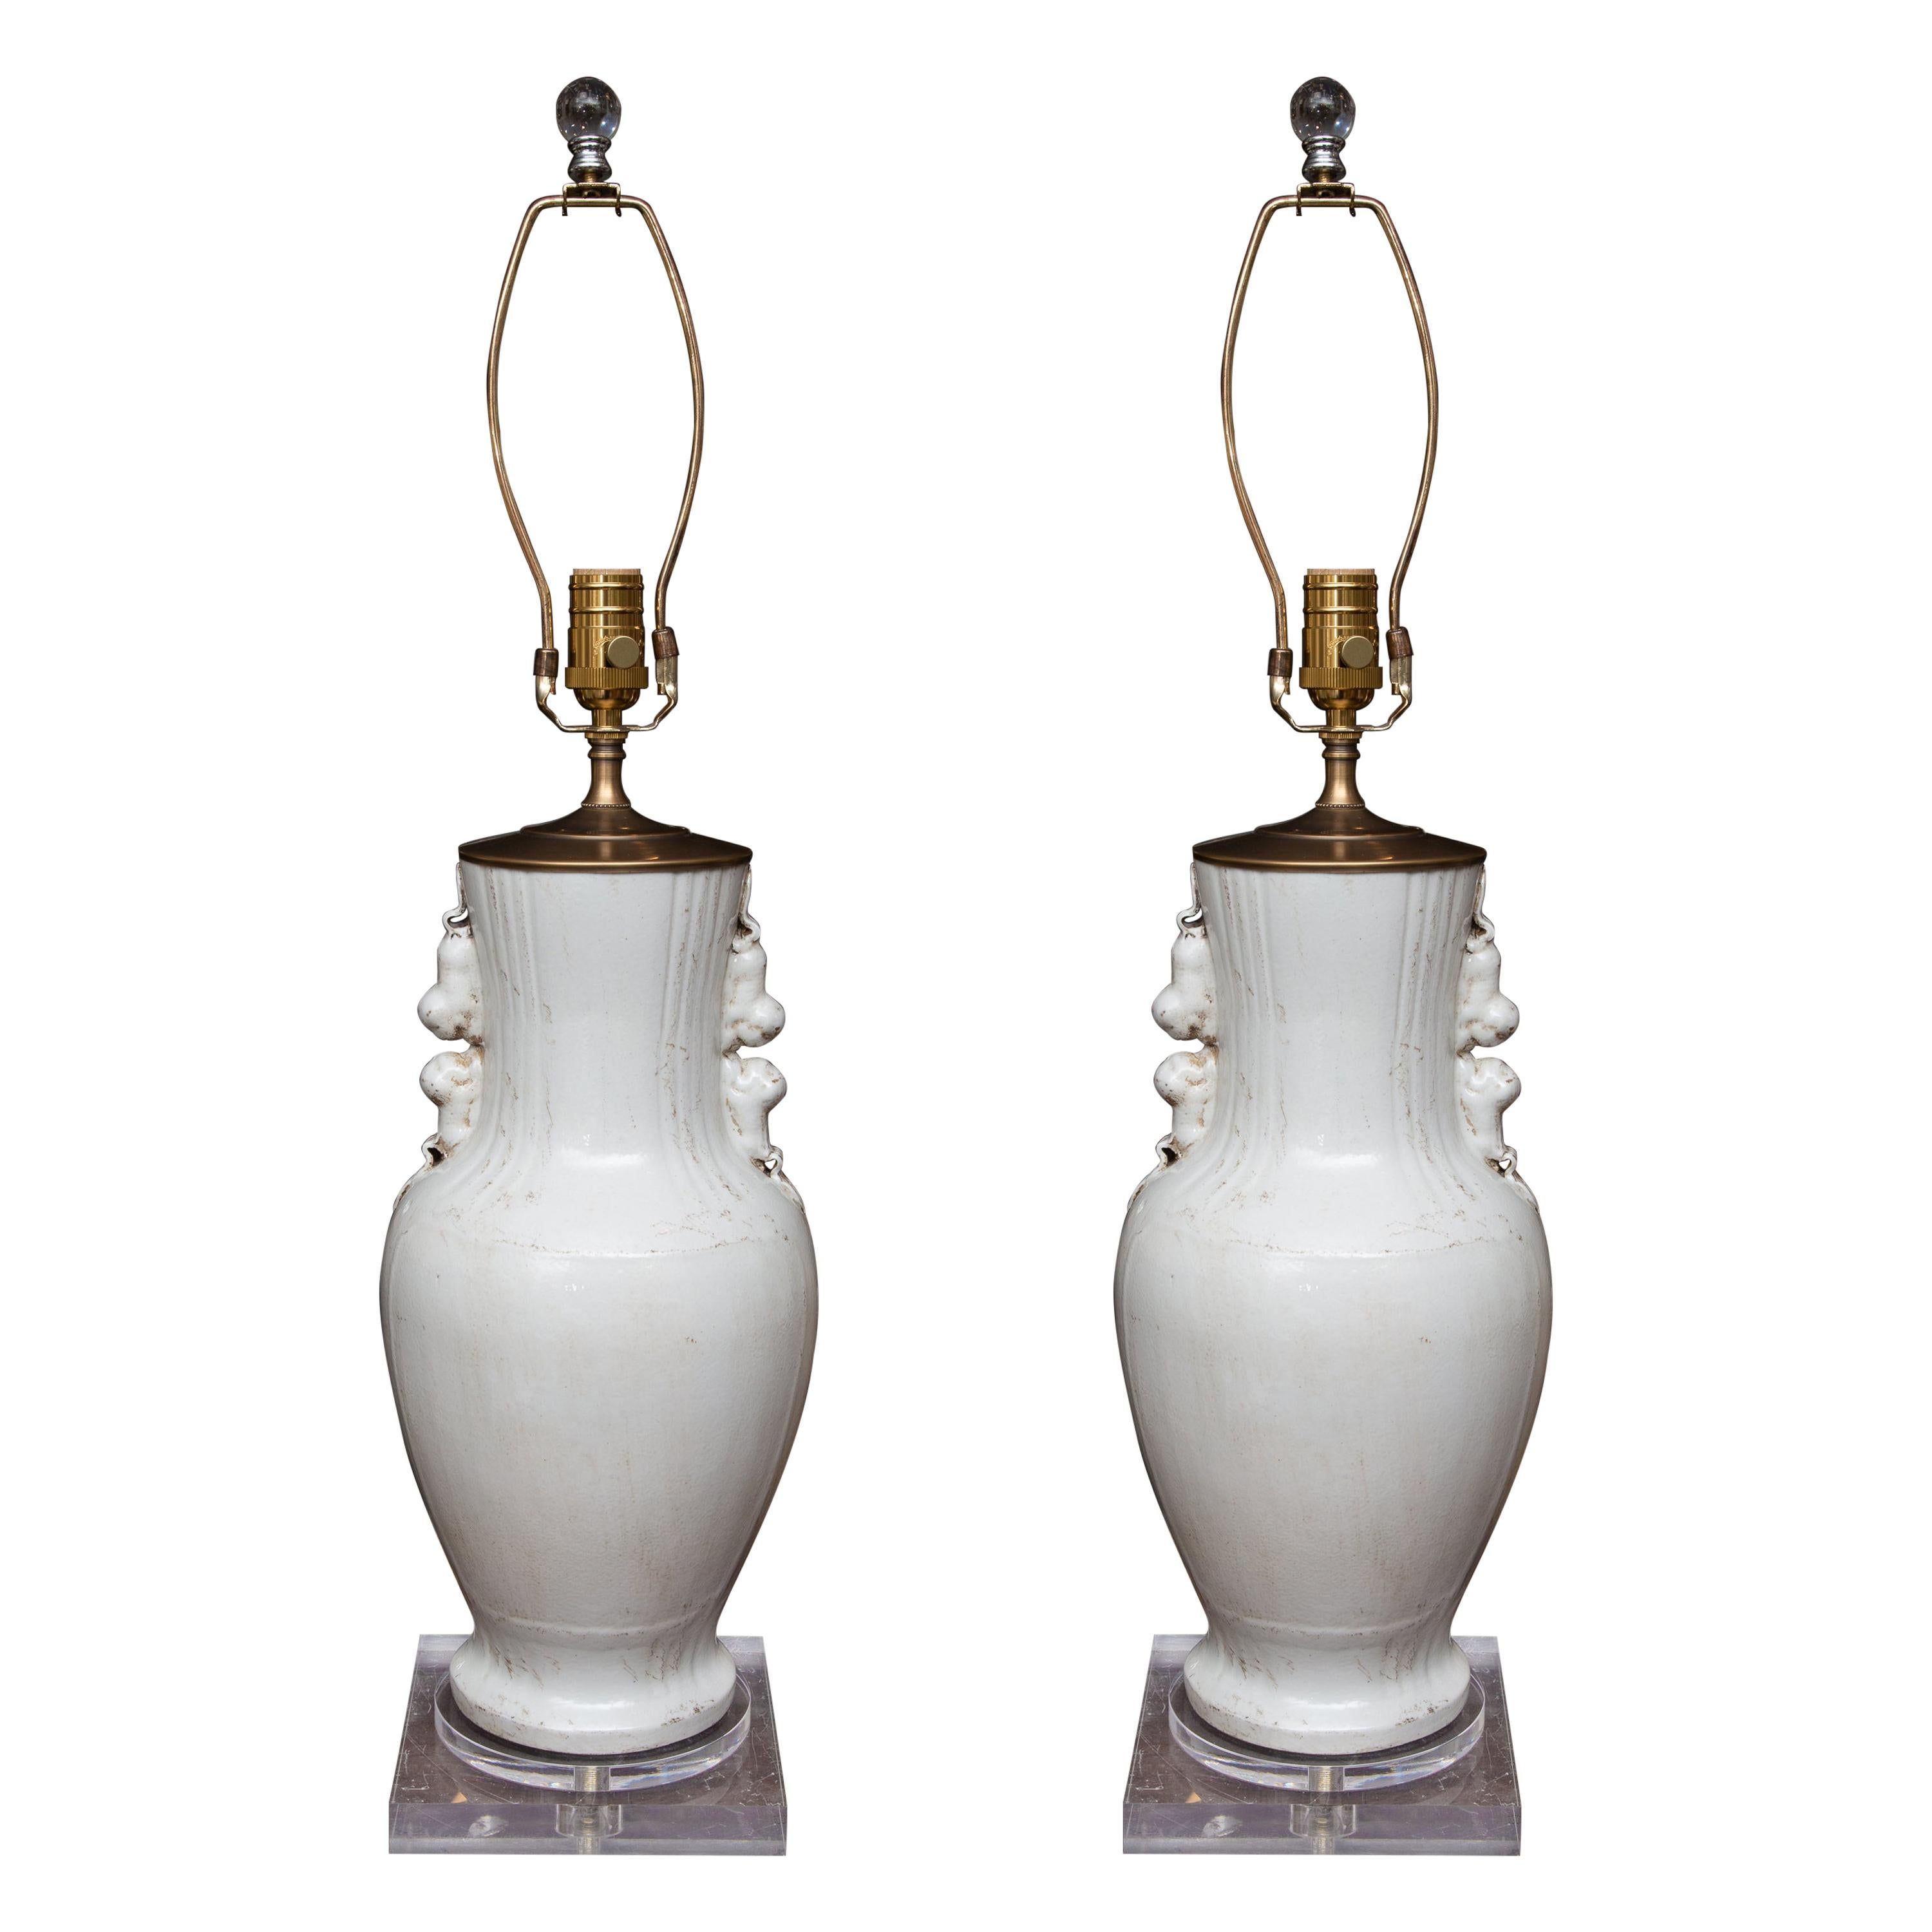 White Glazed Chinese Ceramic Lamp - Pair available